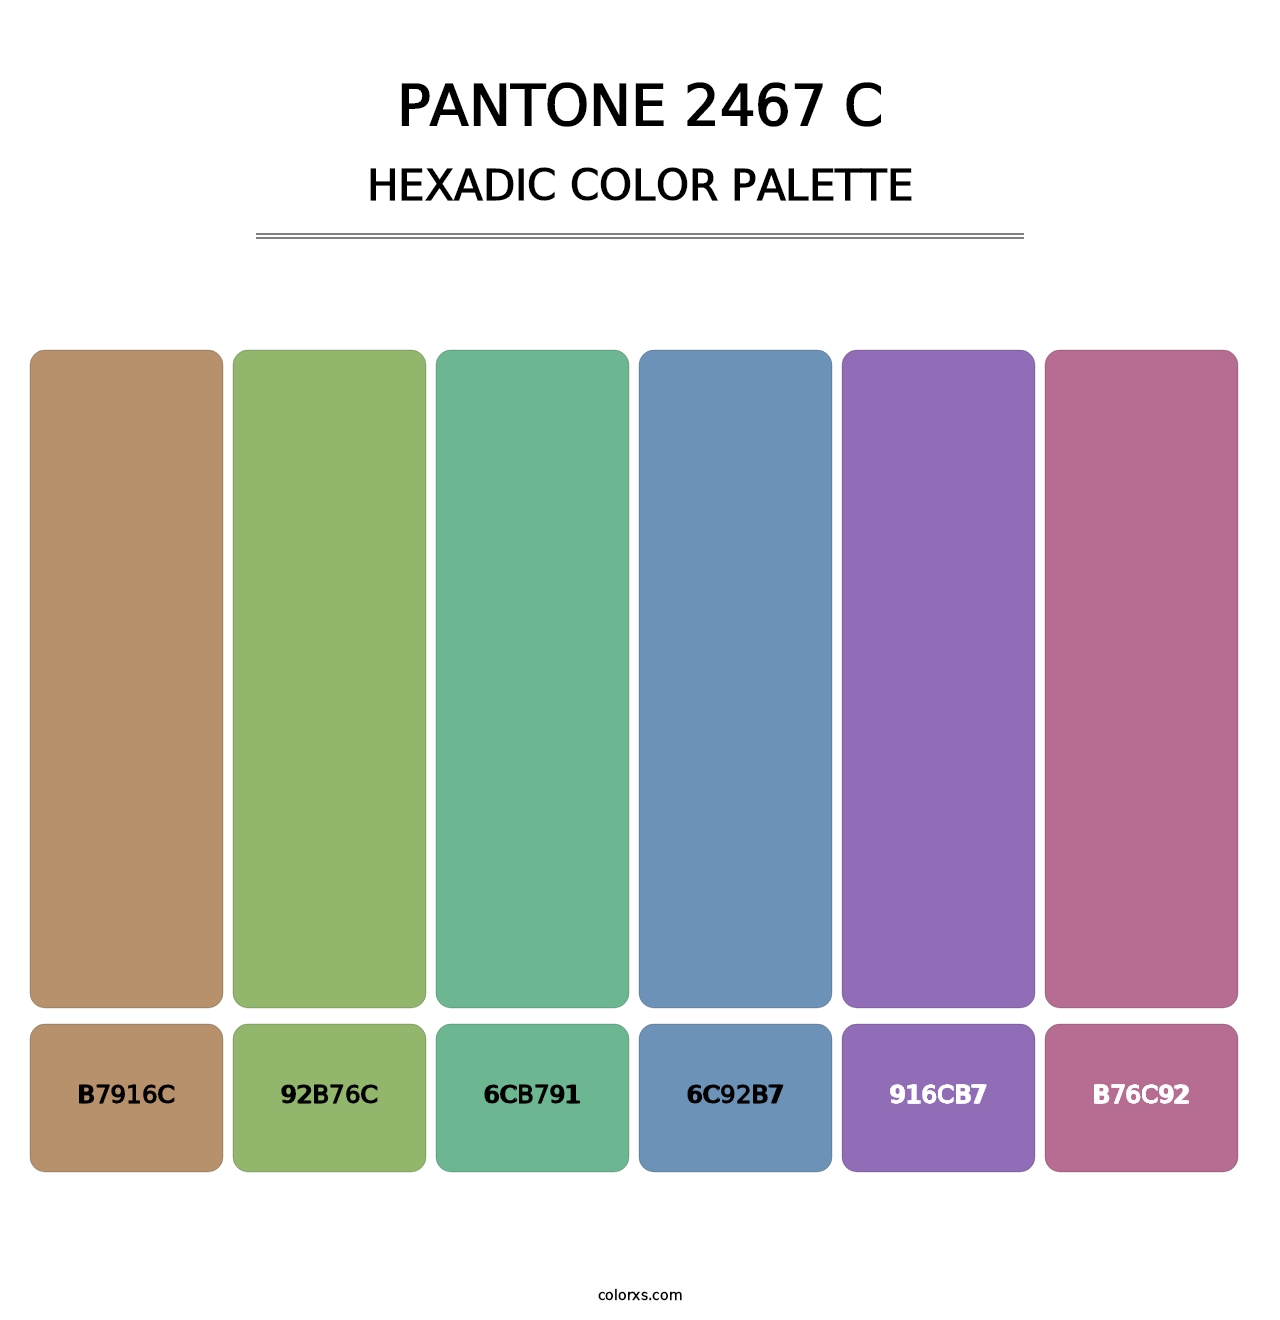 PANTONE 2467 C - Hexadic Color Palette